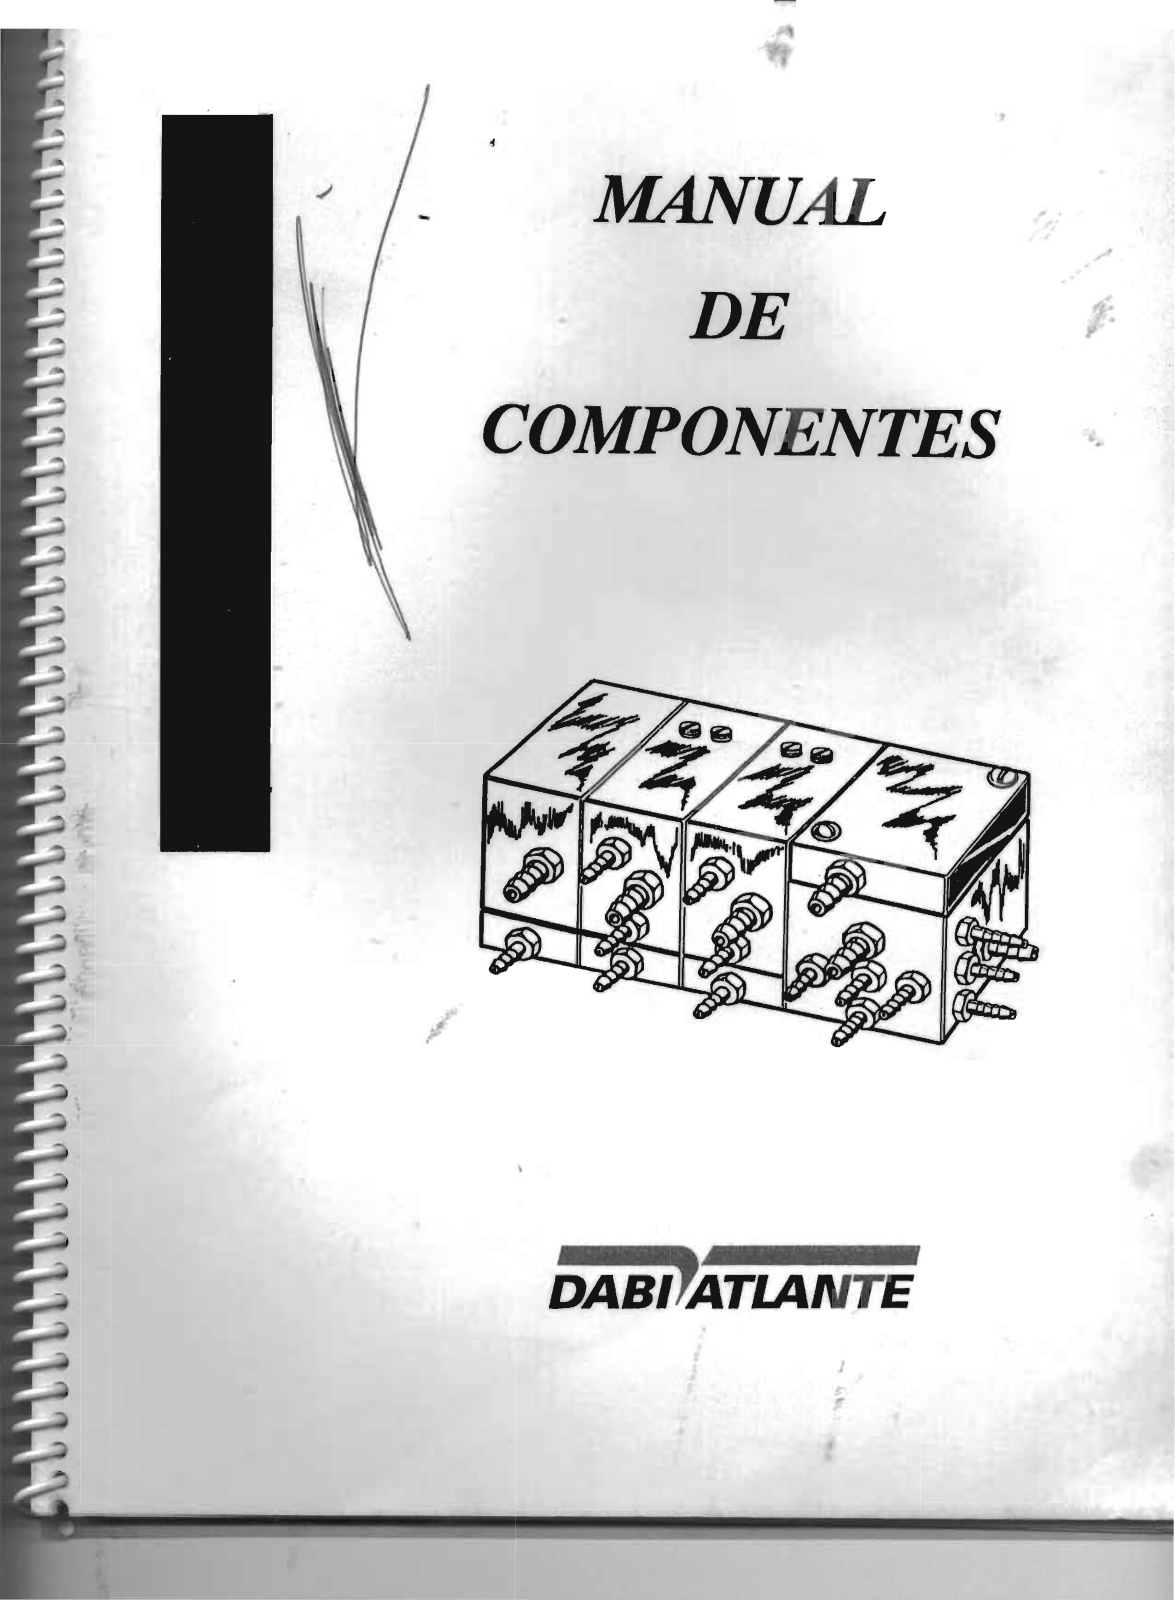 Dabi atlante Components User Manual